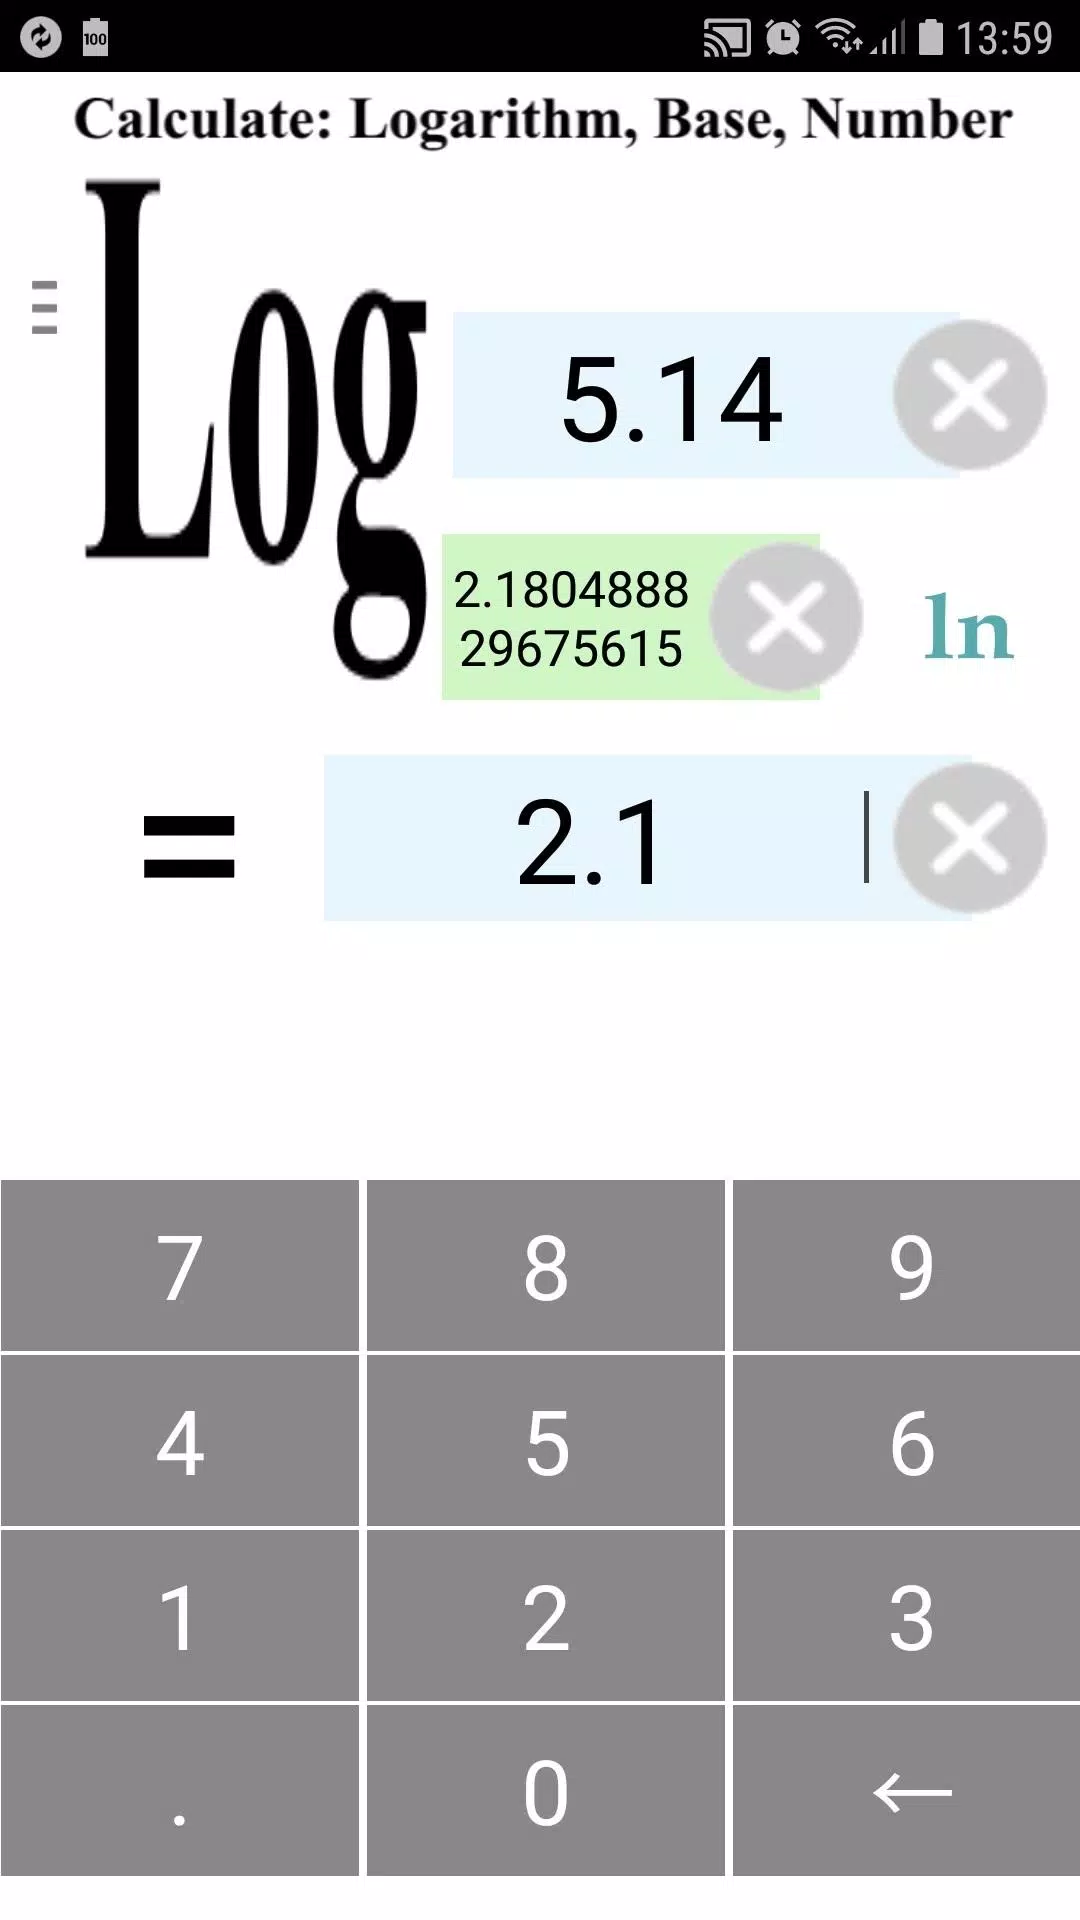 Logarithm Log Ln Base e, Base N, Number calculator APK pour Android  Télécharger